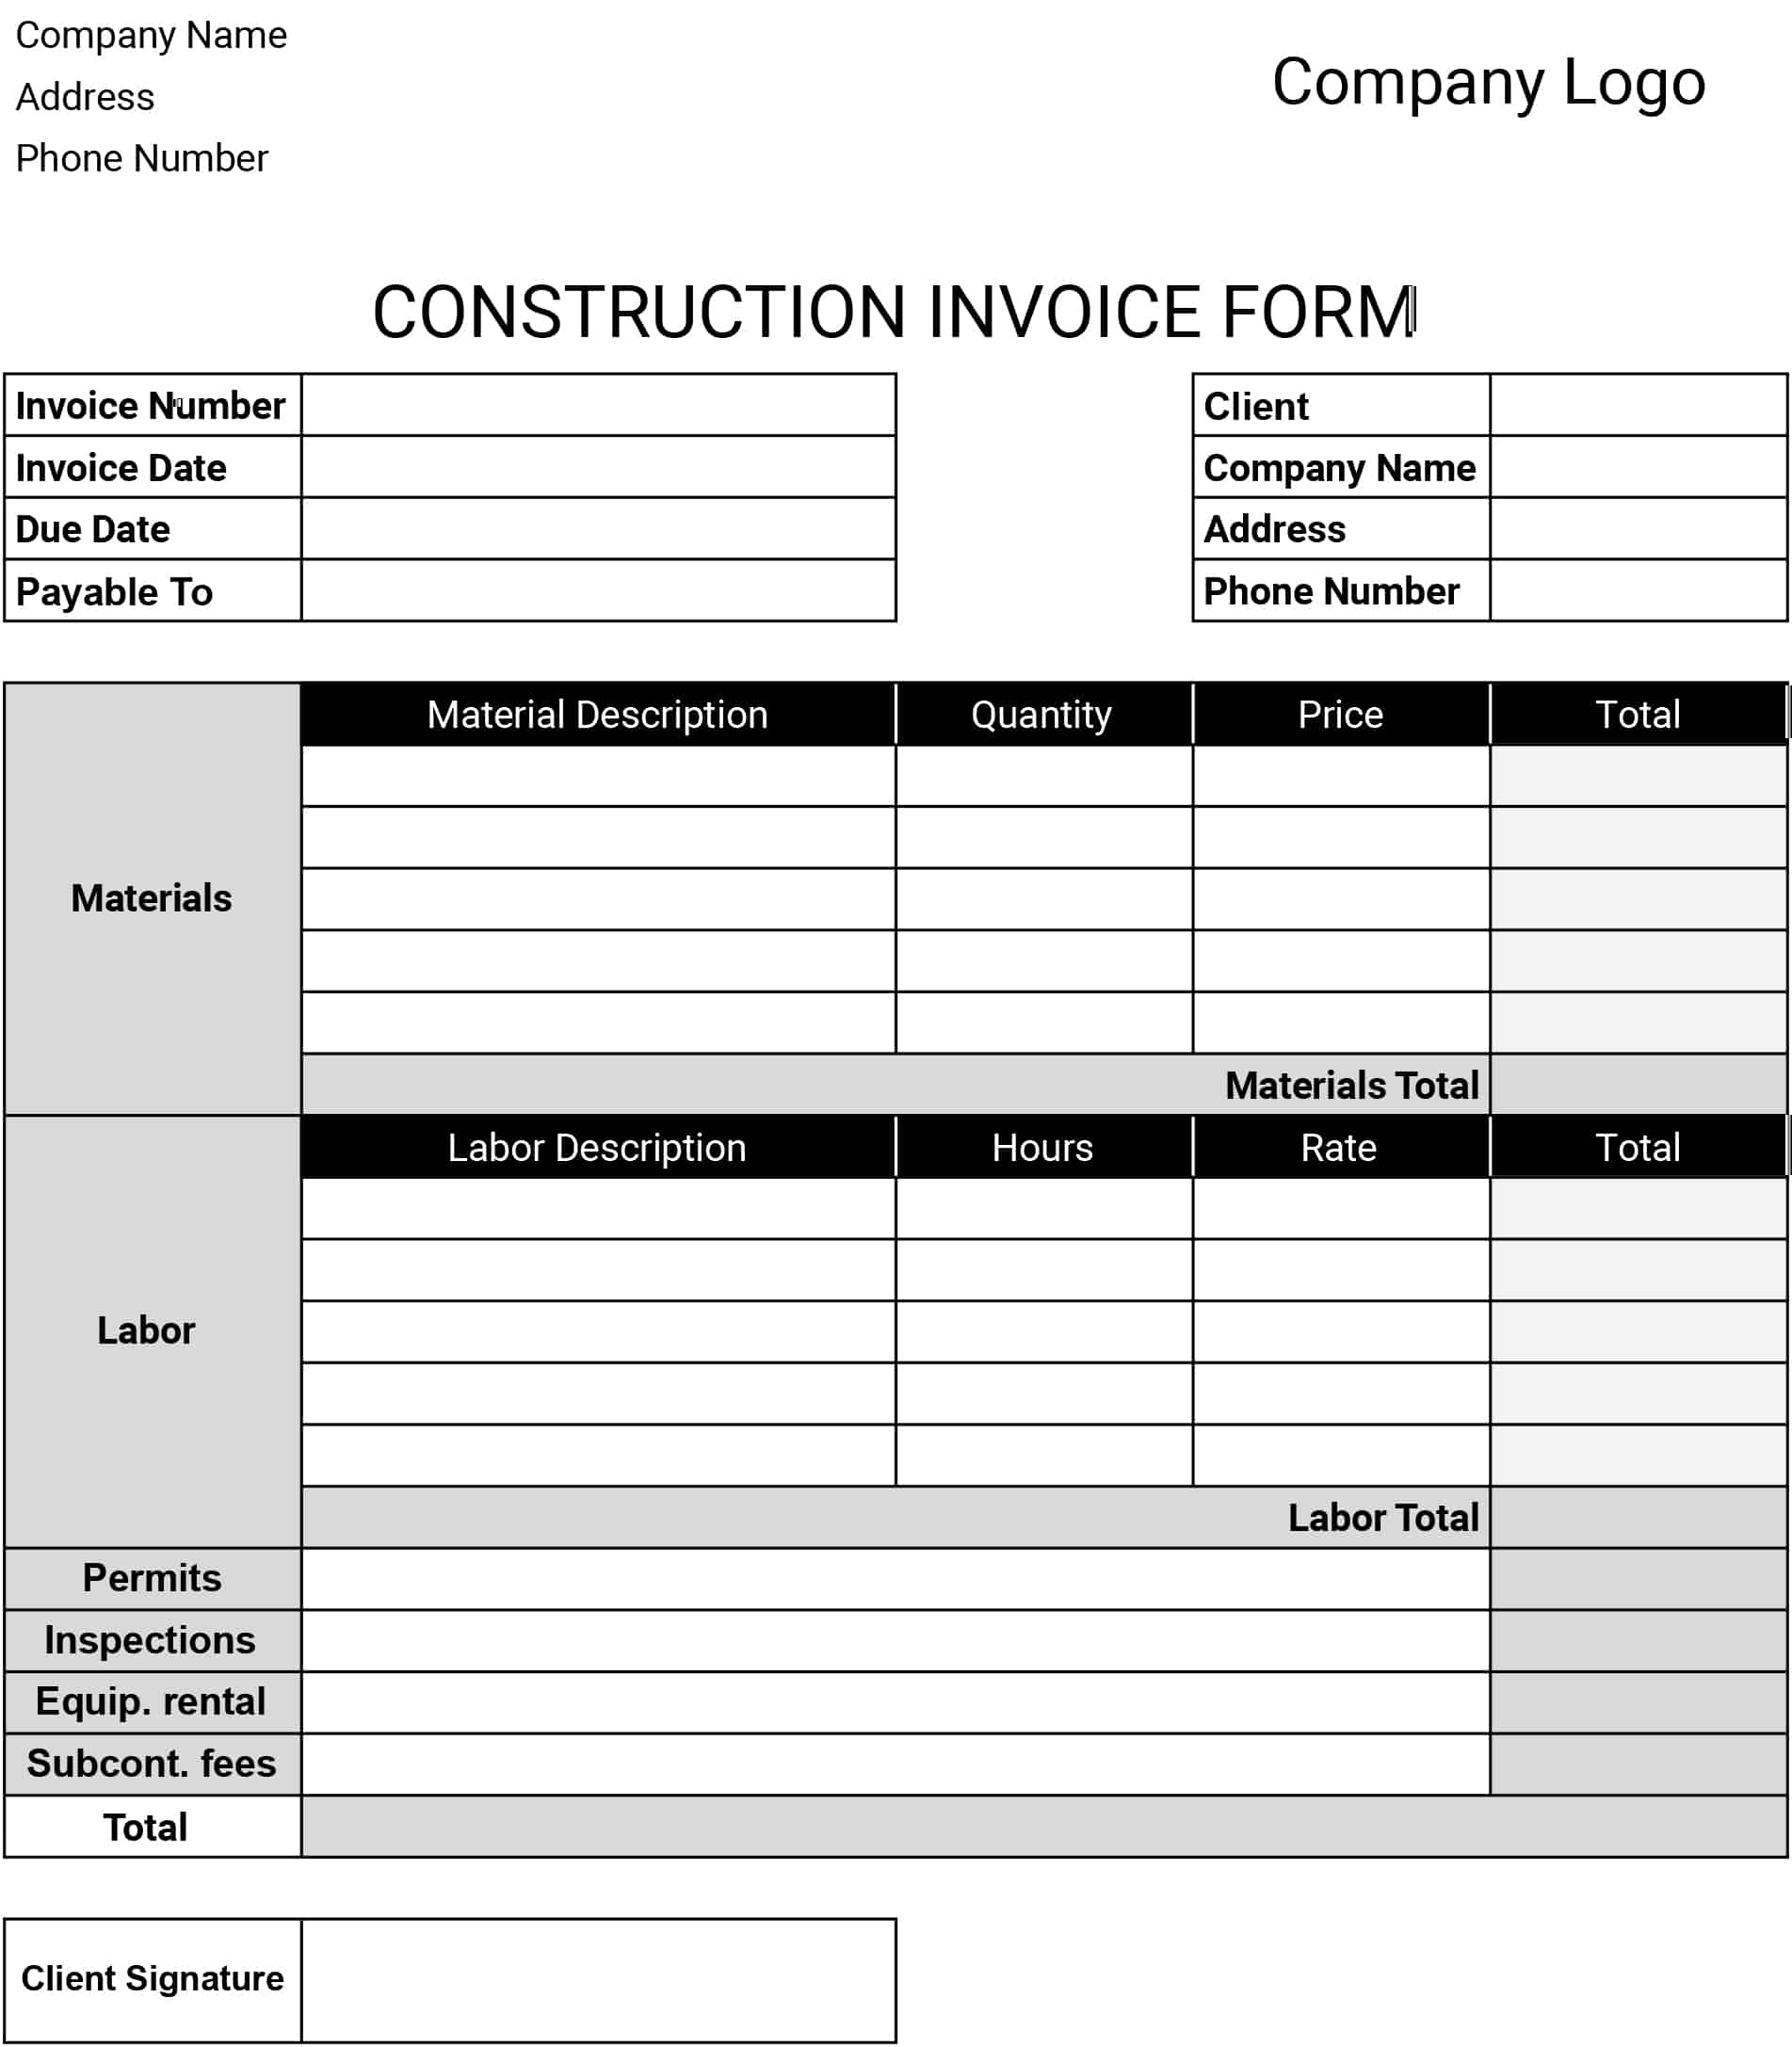 Construction Invoice Form